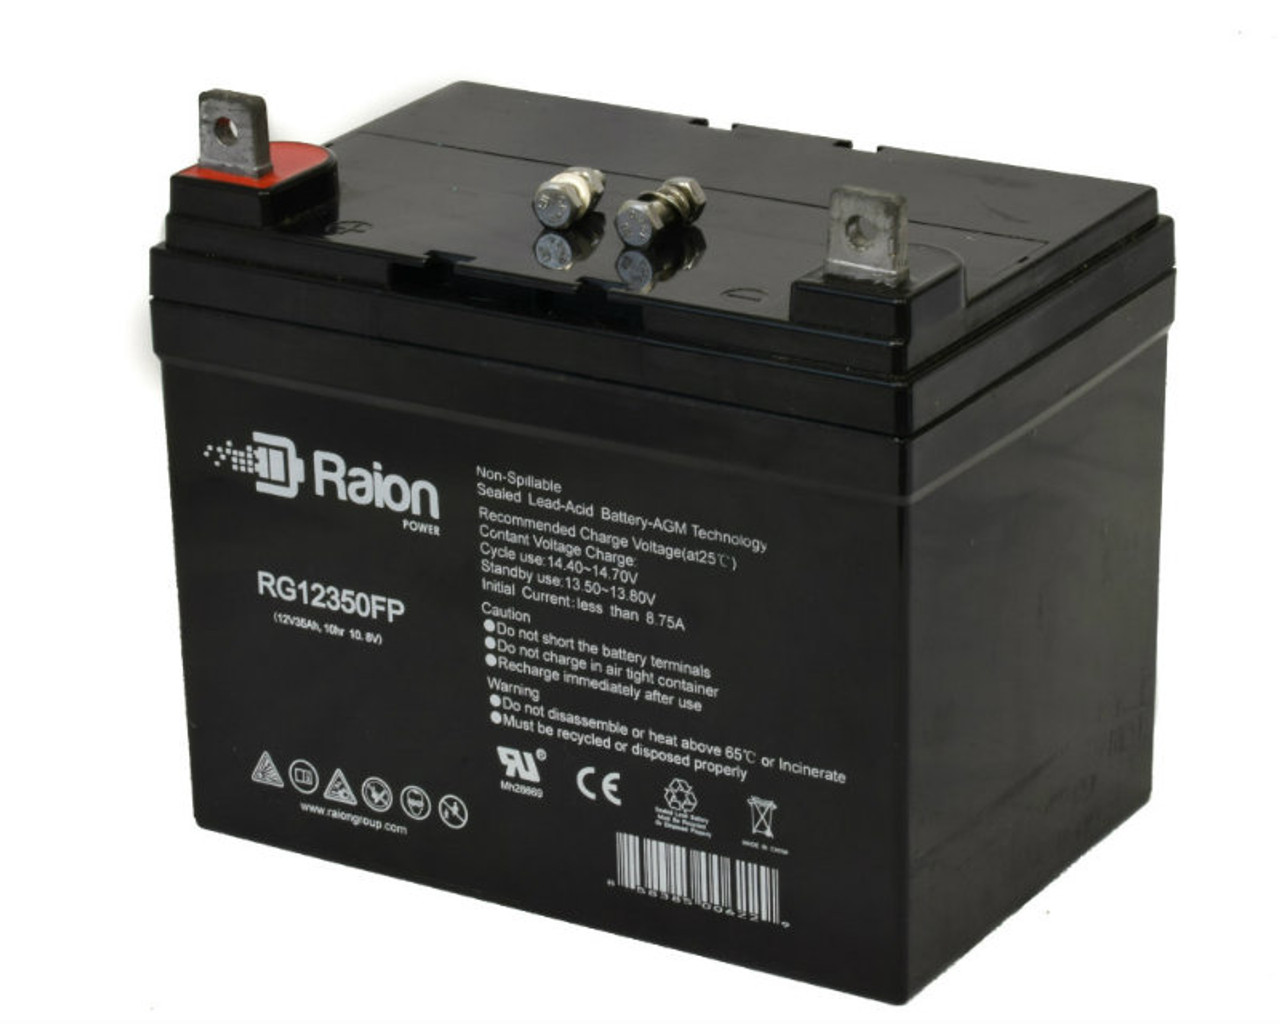 Raion Power Replacement 12V 35Ah RG12350FP Battery for Rhino SLA 33-12FP